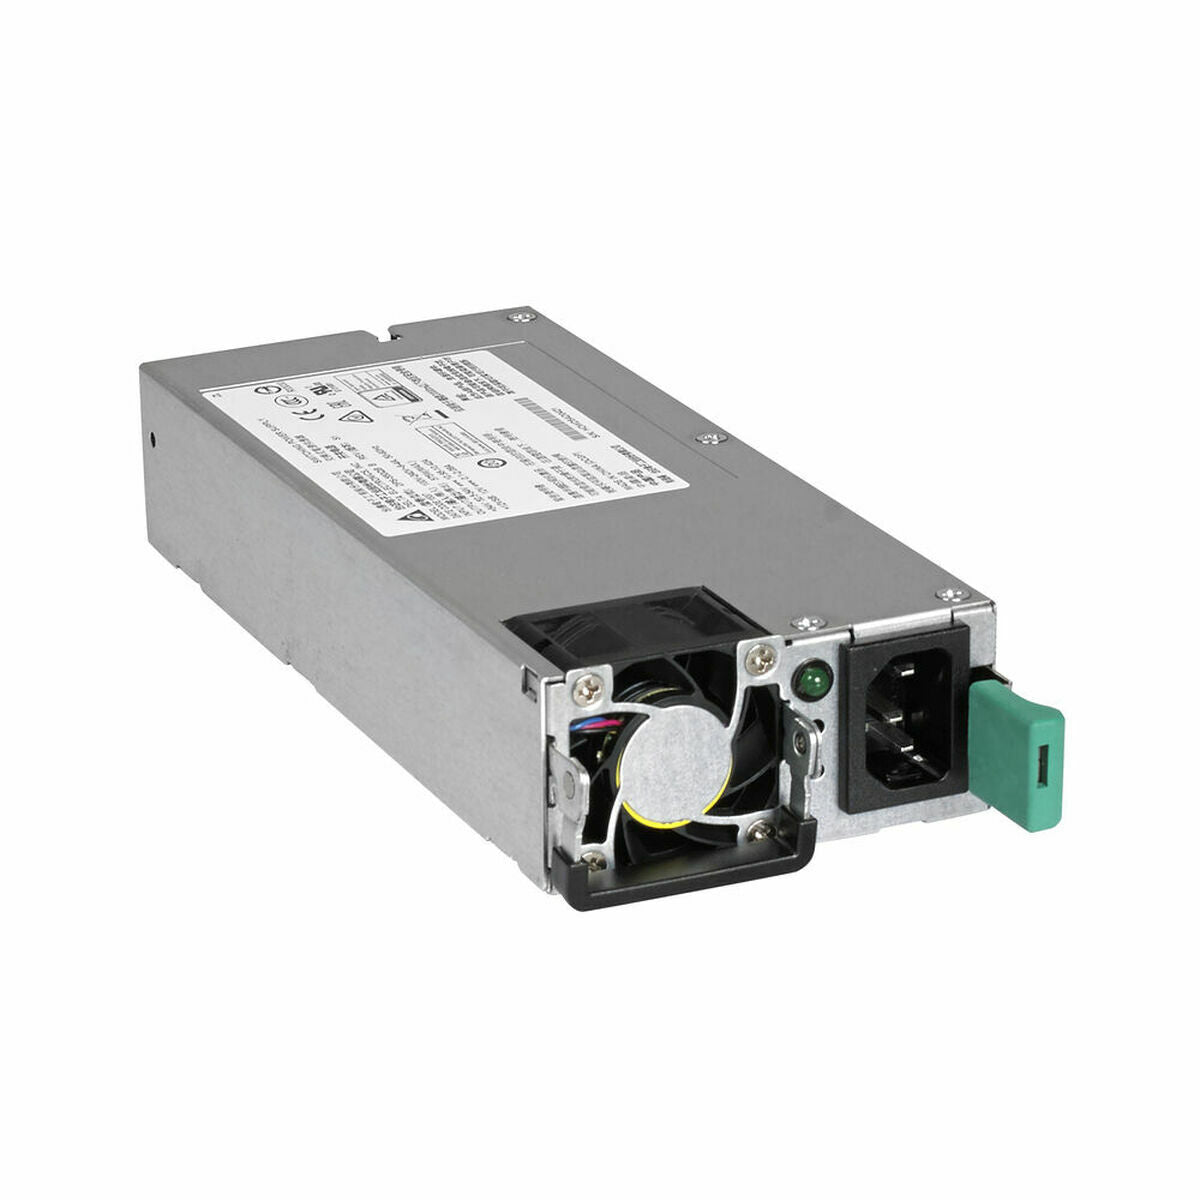 Switch Netgear GSM4328PA-100NES